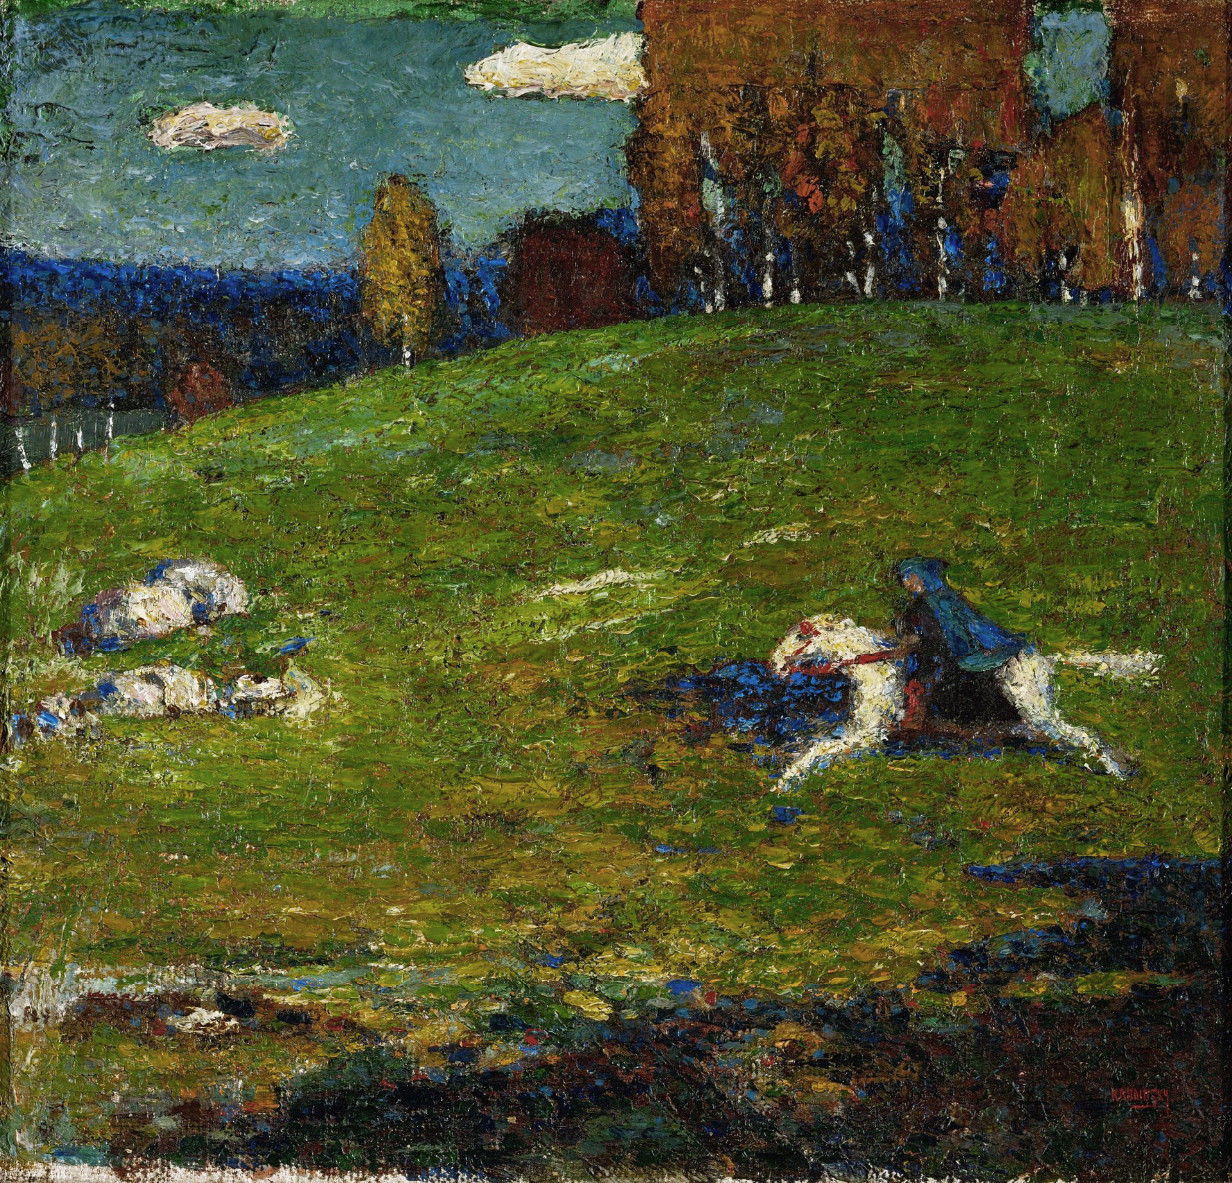 Comienzos del expresionismo, Der Blaue Reiter van de painterWassily Kandinsky, 1903